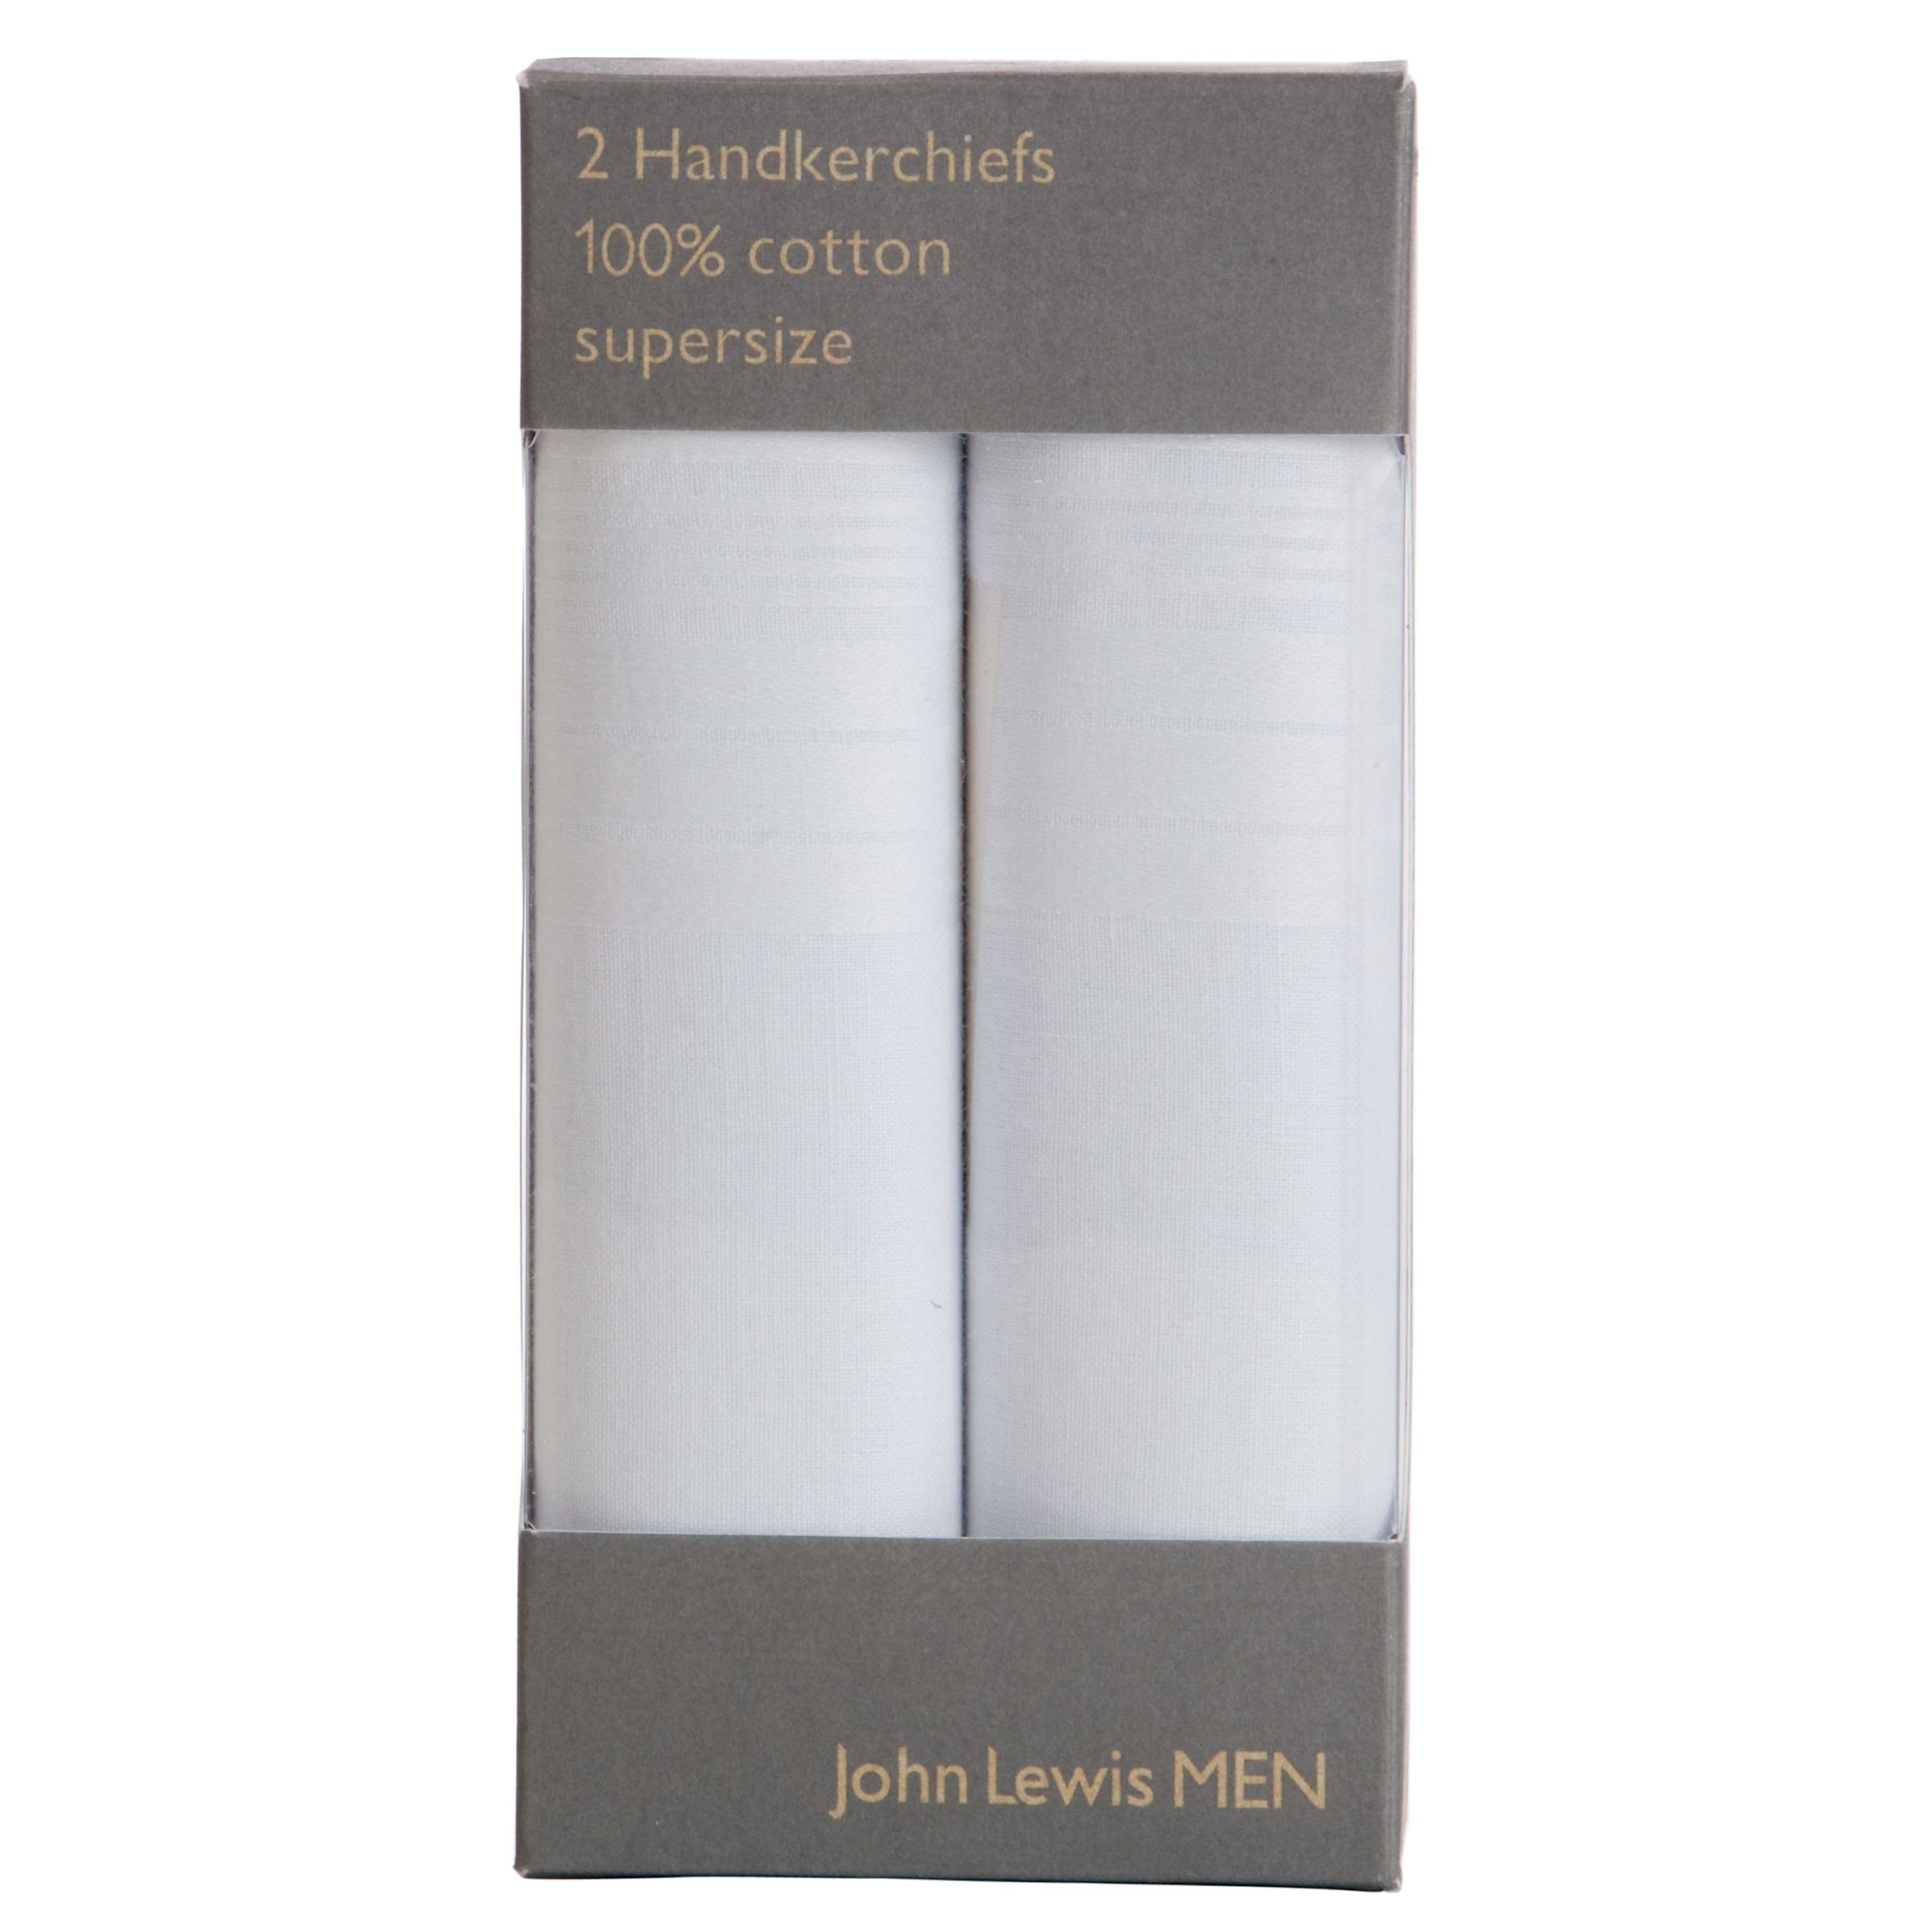 Buy John Lewis Supersize Handkerchiefs, Pack of 2, White Online at johnlewis.com